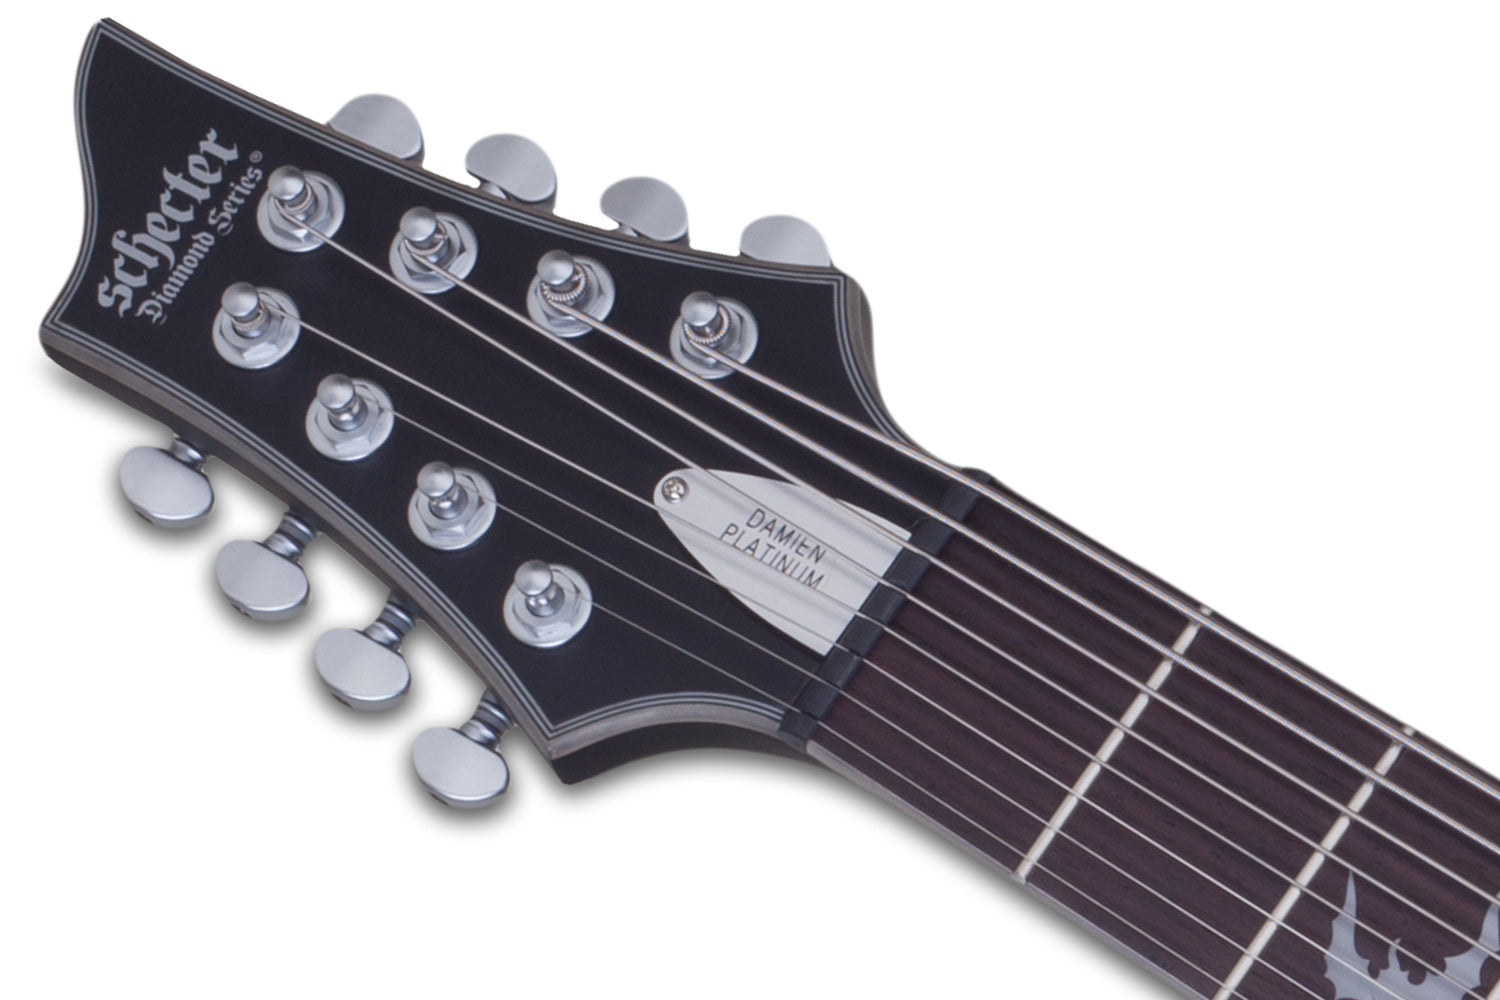 Schecter DAMIEN PTM 8 LH SBK LH Satin Black 8 String Guitar with EMG 81, 85 Pickups 1188-SHC